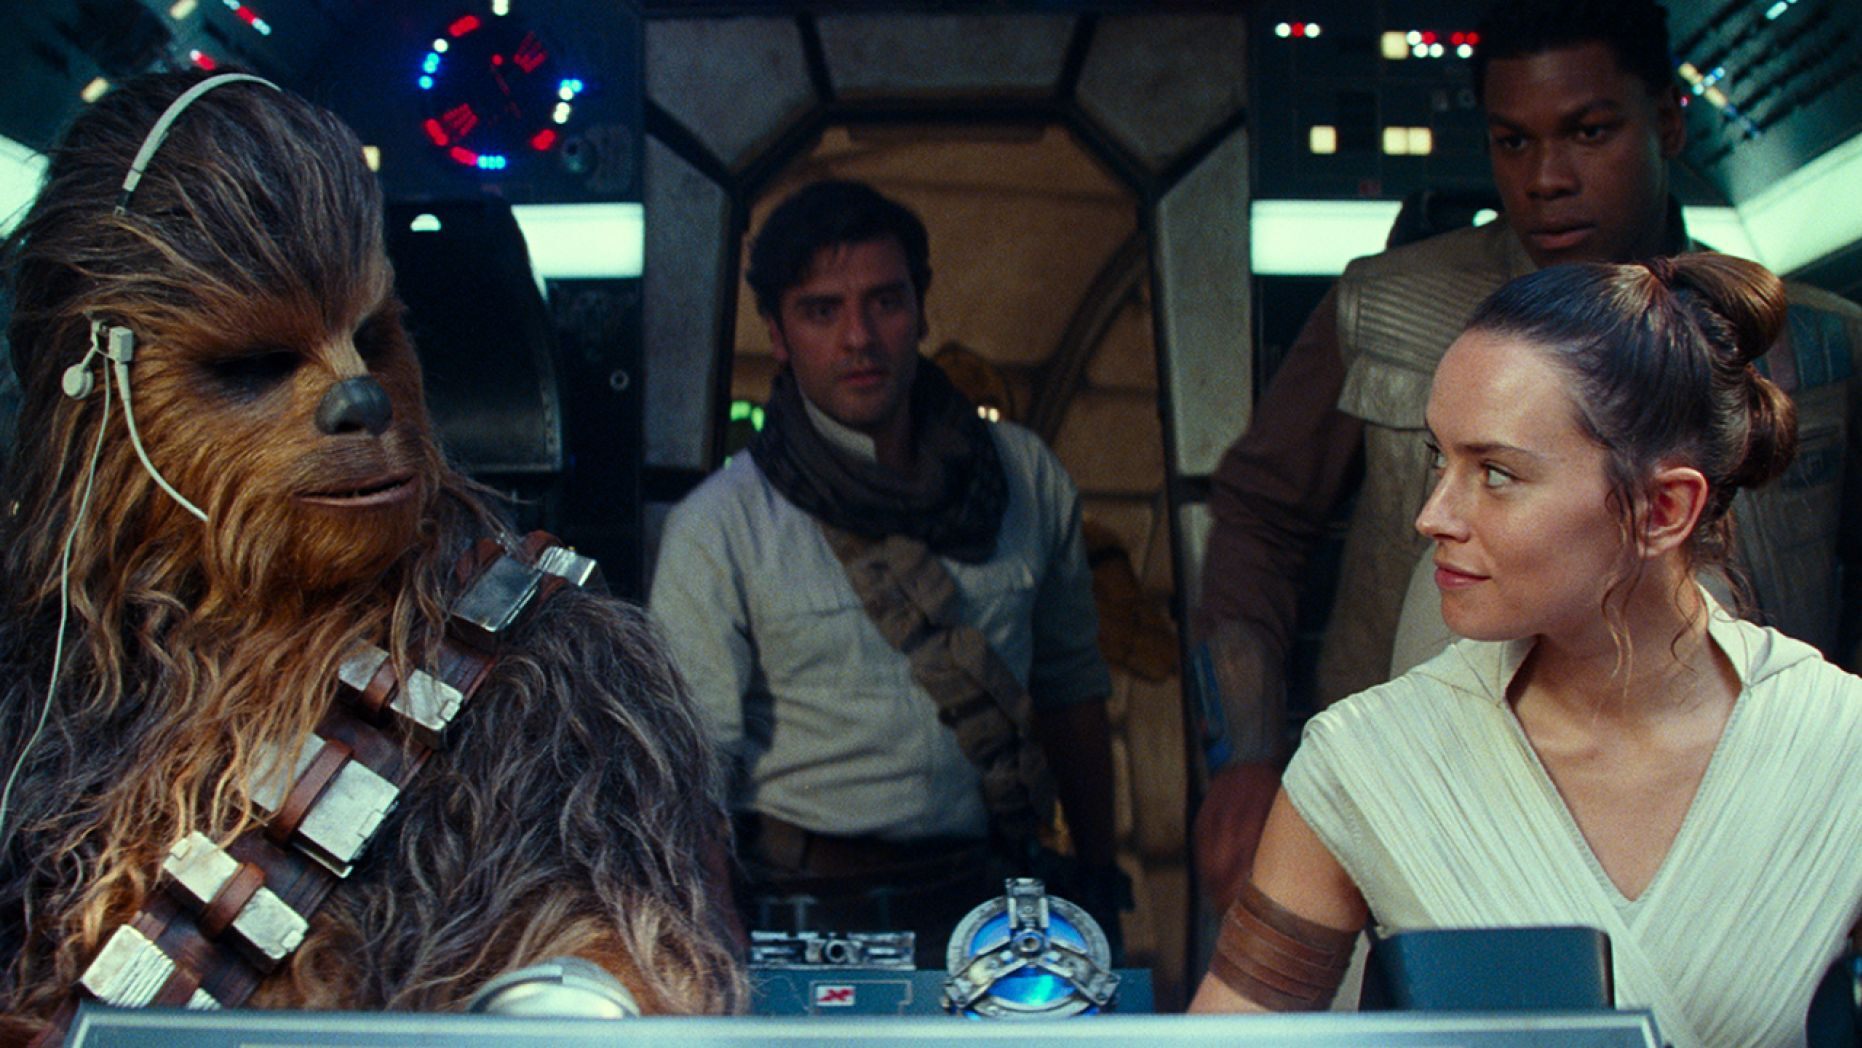 Star Wars: Rise of Skywalker wins weekend box office but fails to match its recent predecessors